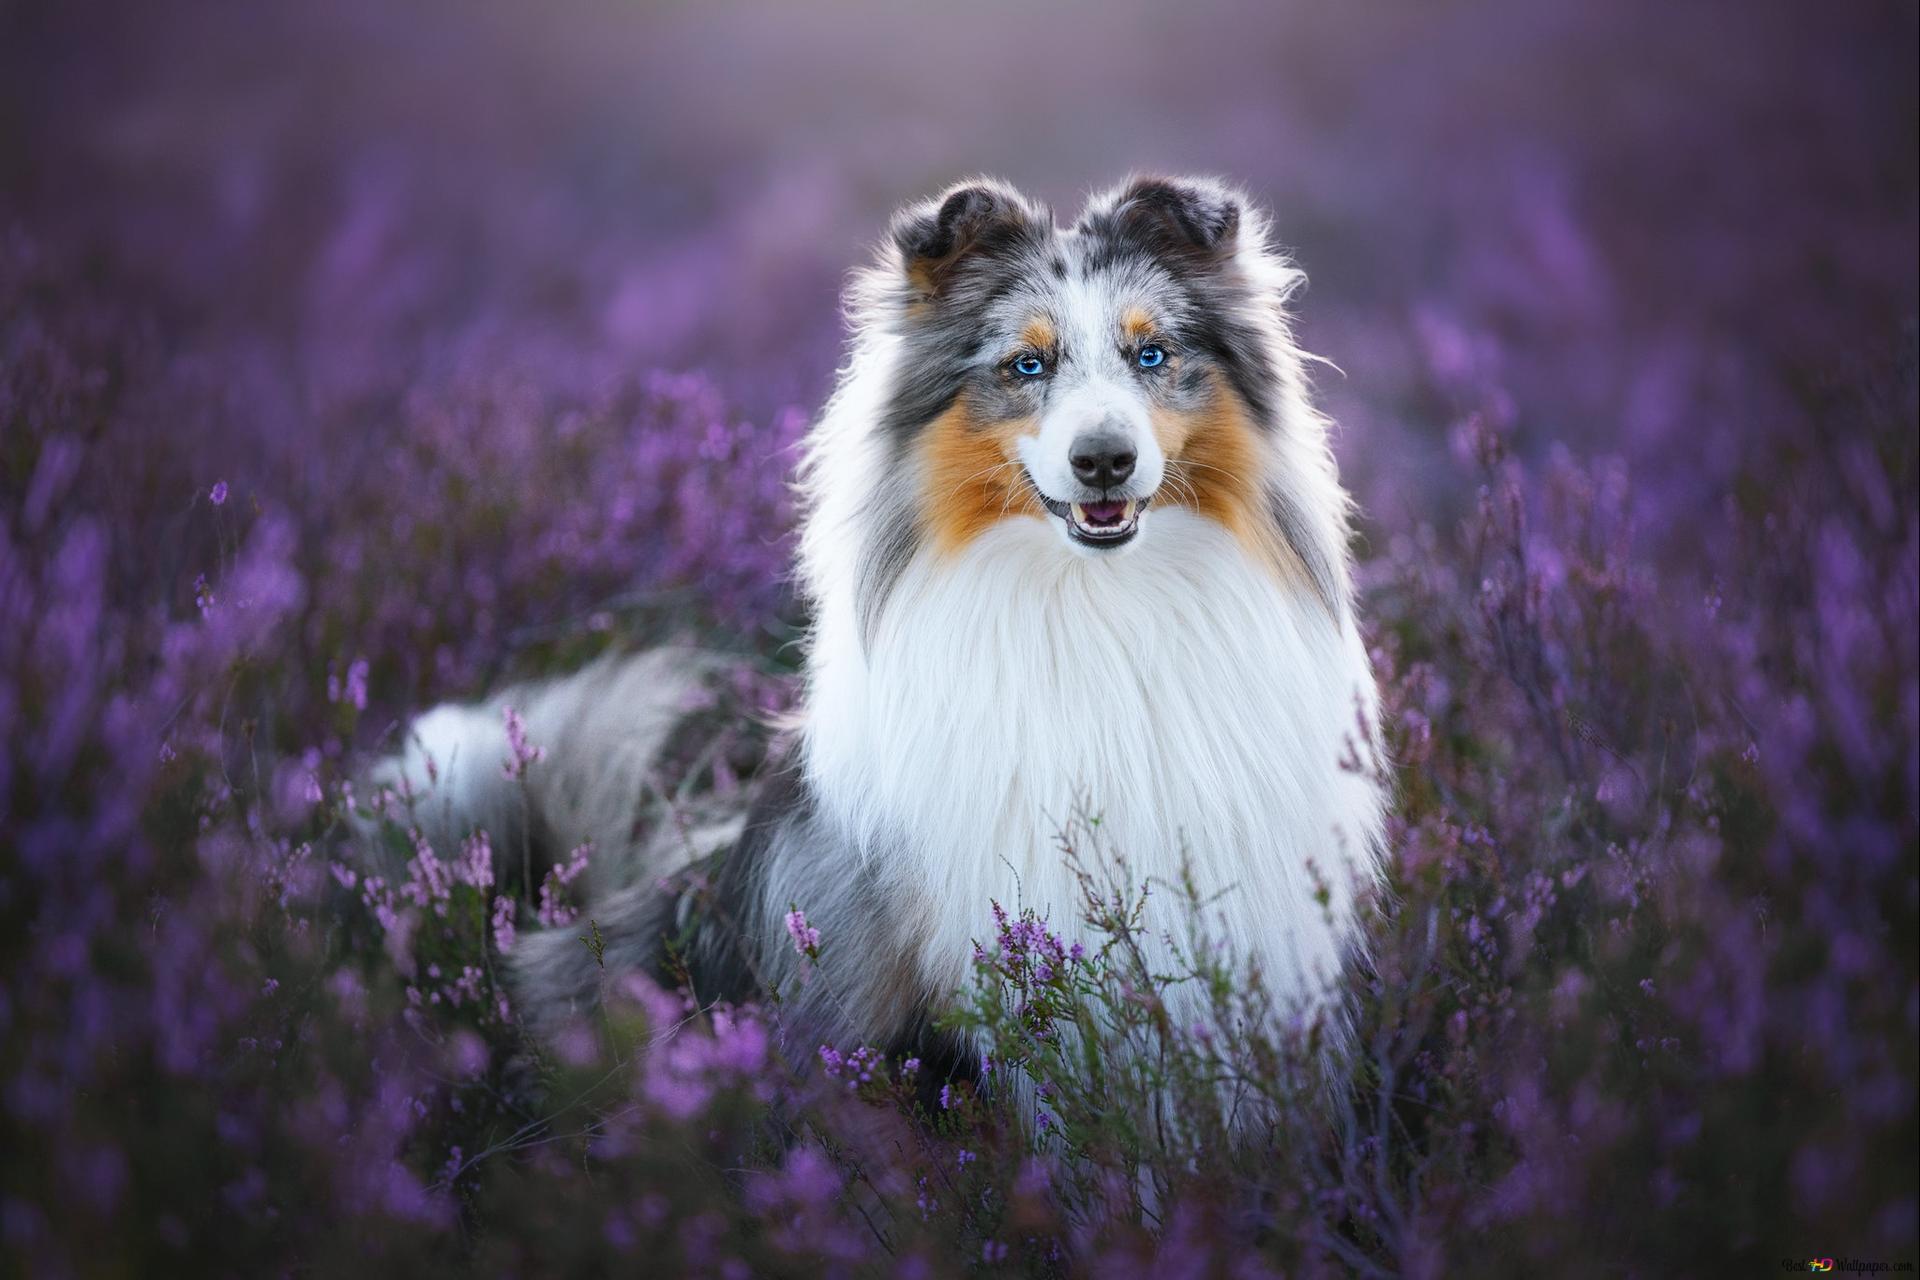 Smiling white pretty dog in a purple flower field 2K wallpaper download